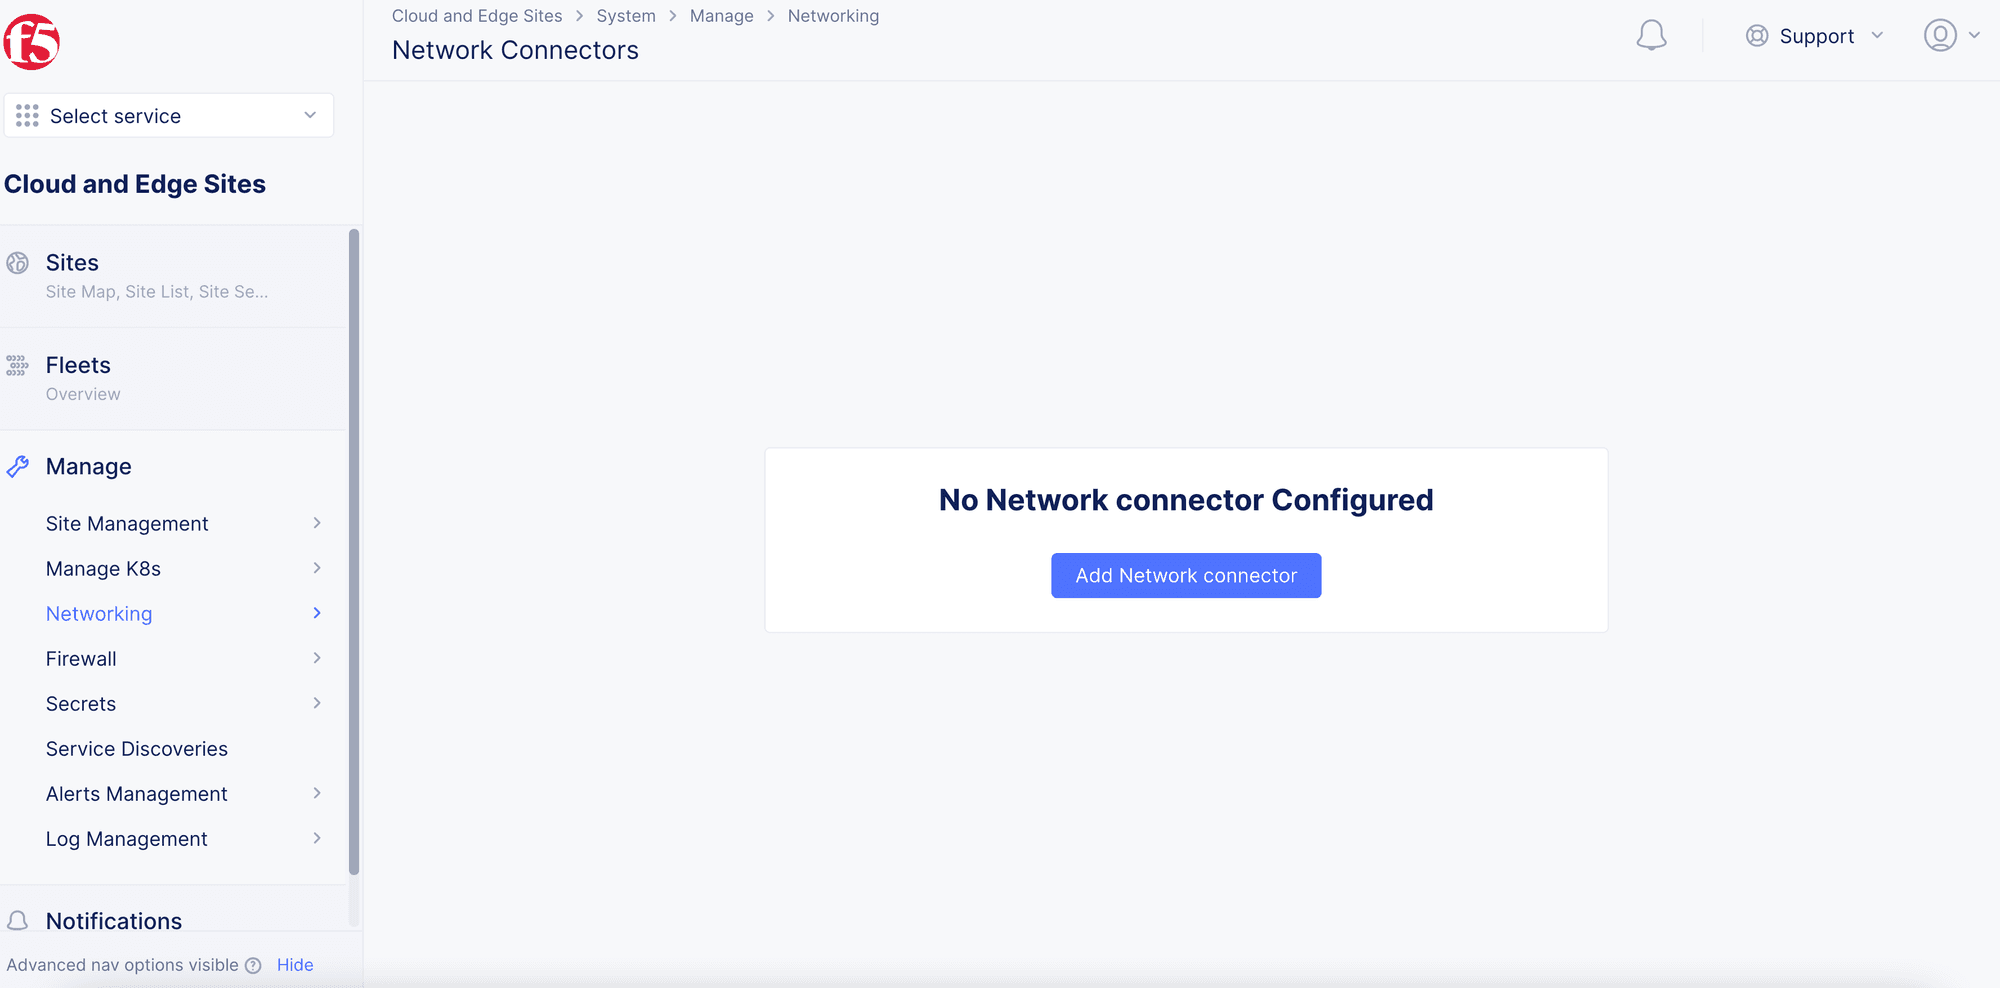 Network Connectors